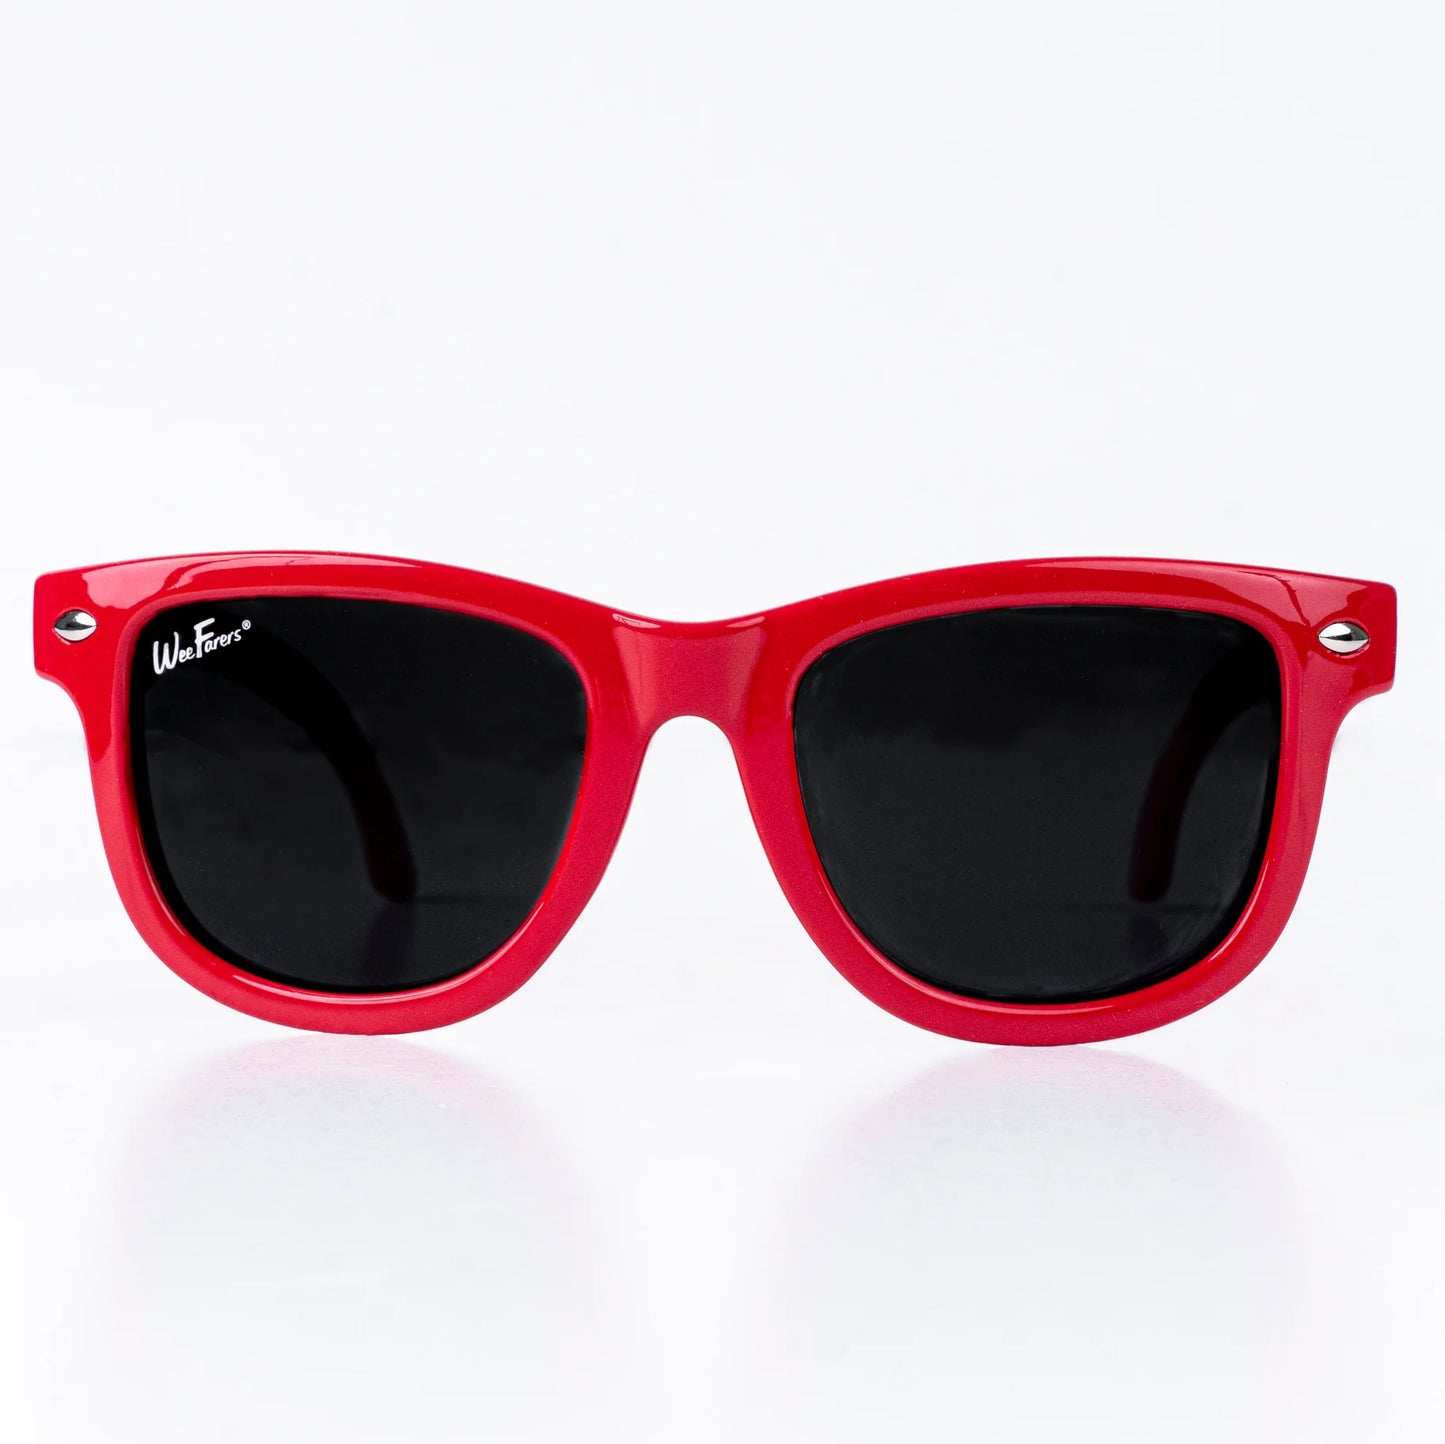 Weefarers - Red Polarized Sunglasses